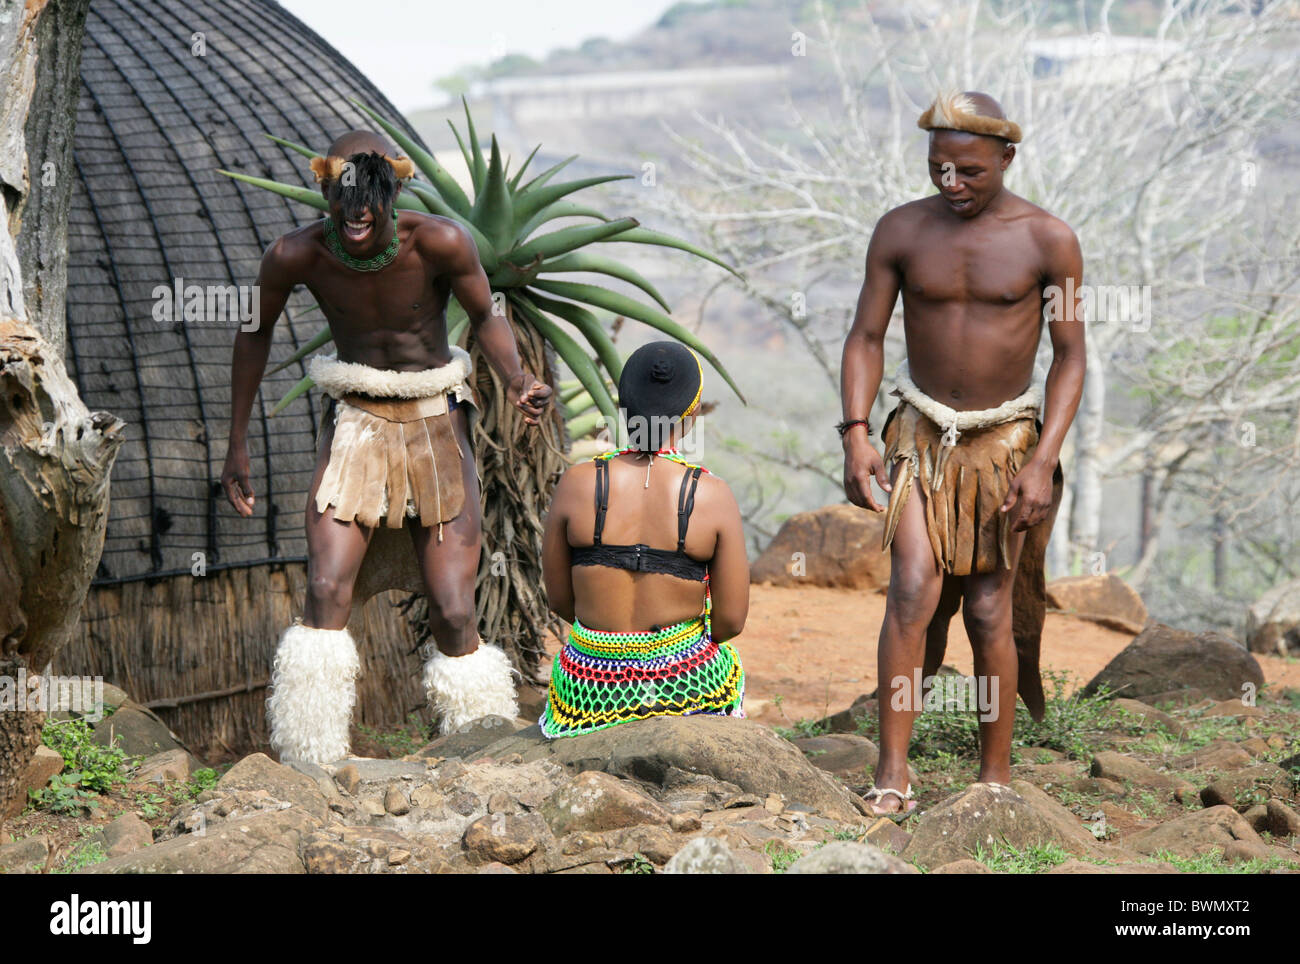 South Africa, Simunye, Zulu Warriors Fighting, Stock Photo